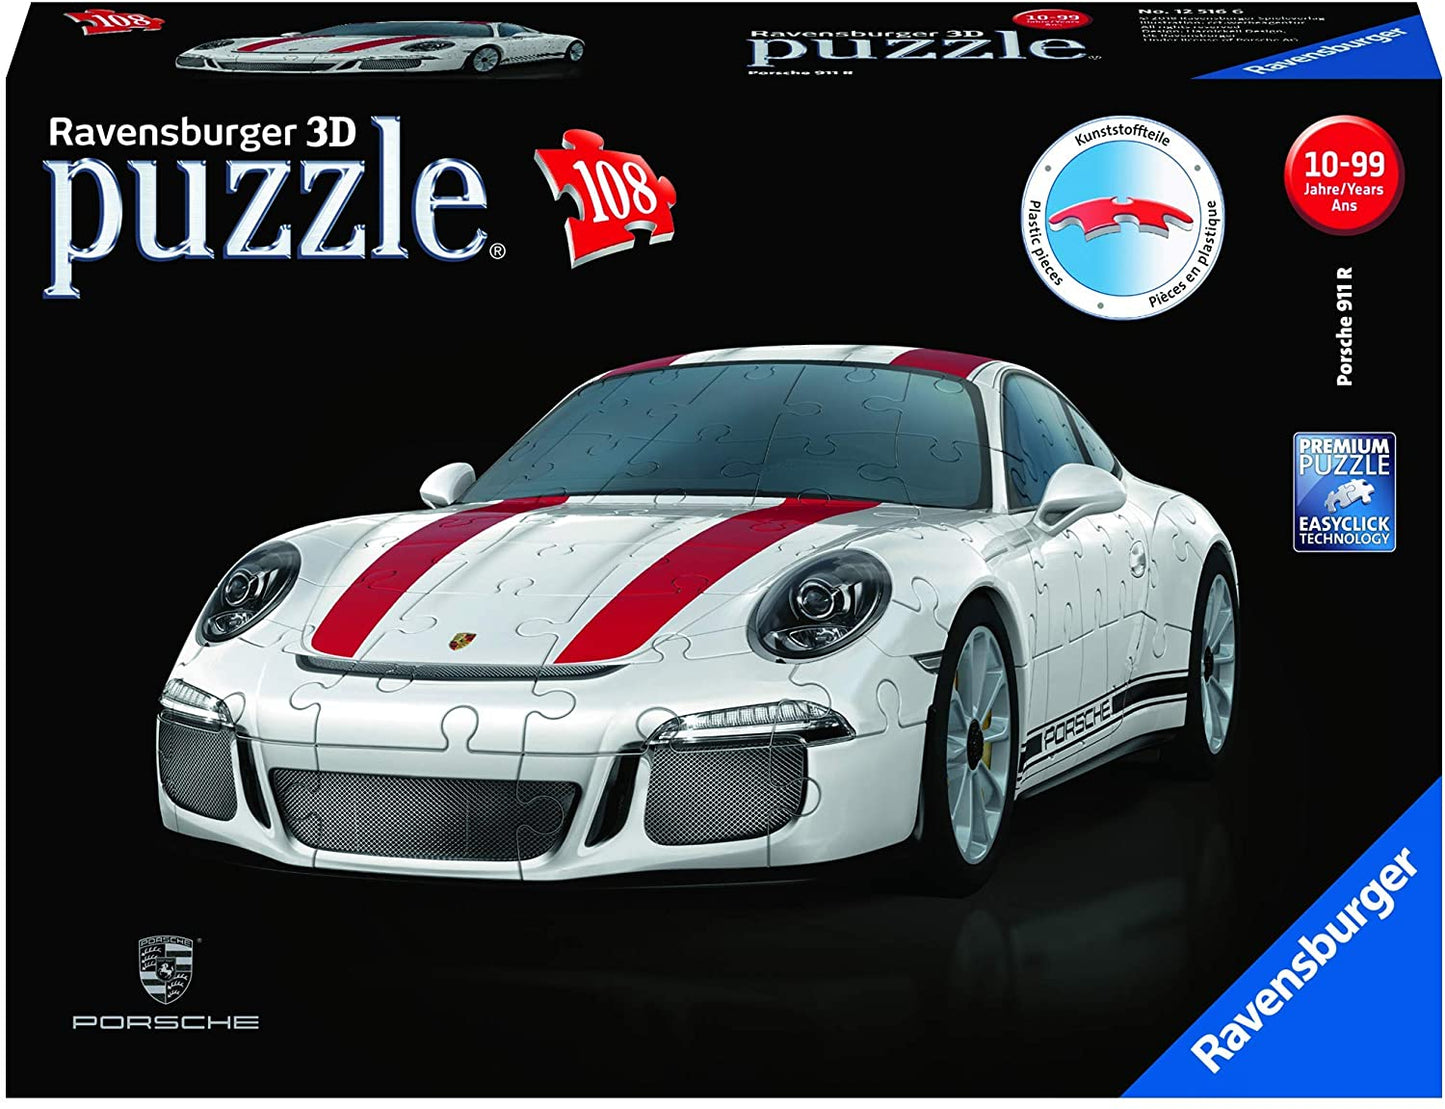 Ravensburger Porsche 911 - 108 Piece 3D Jigsaw Puzzle